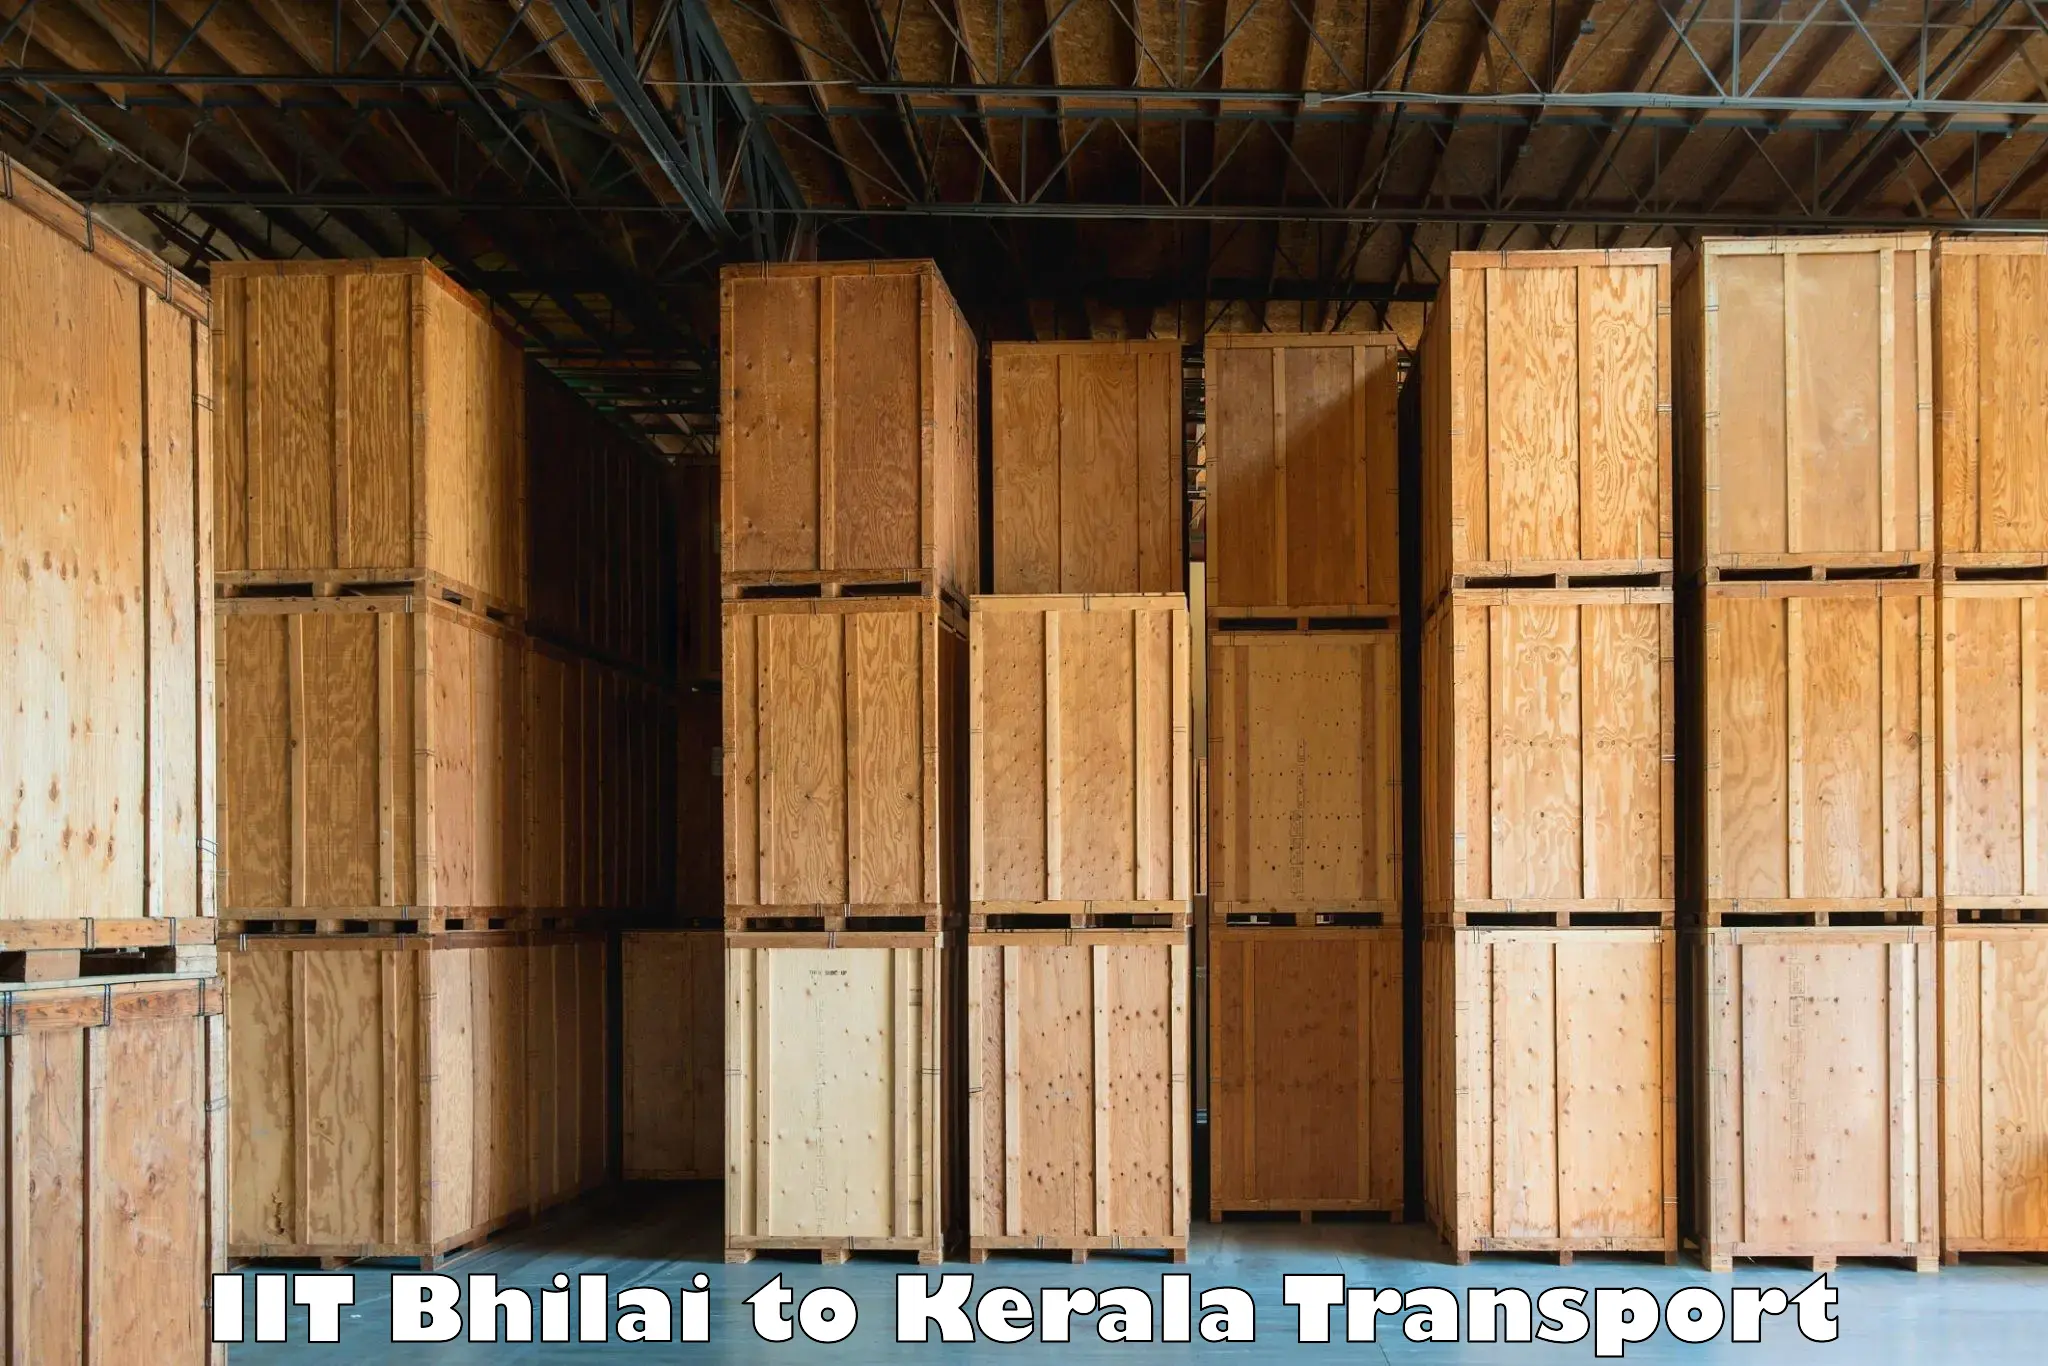 Nearest transport service IIT Bhilai to Ranni